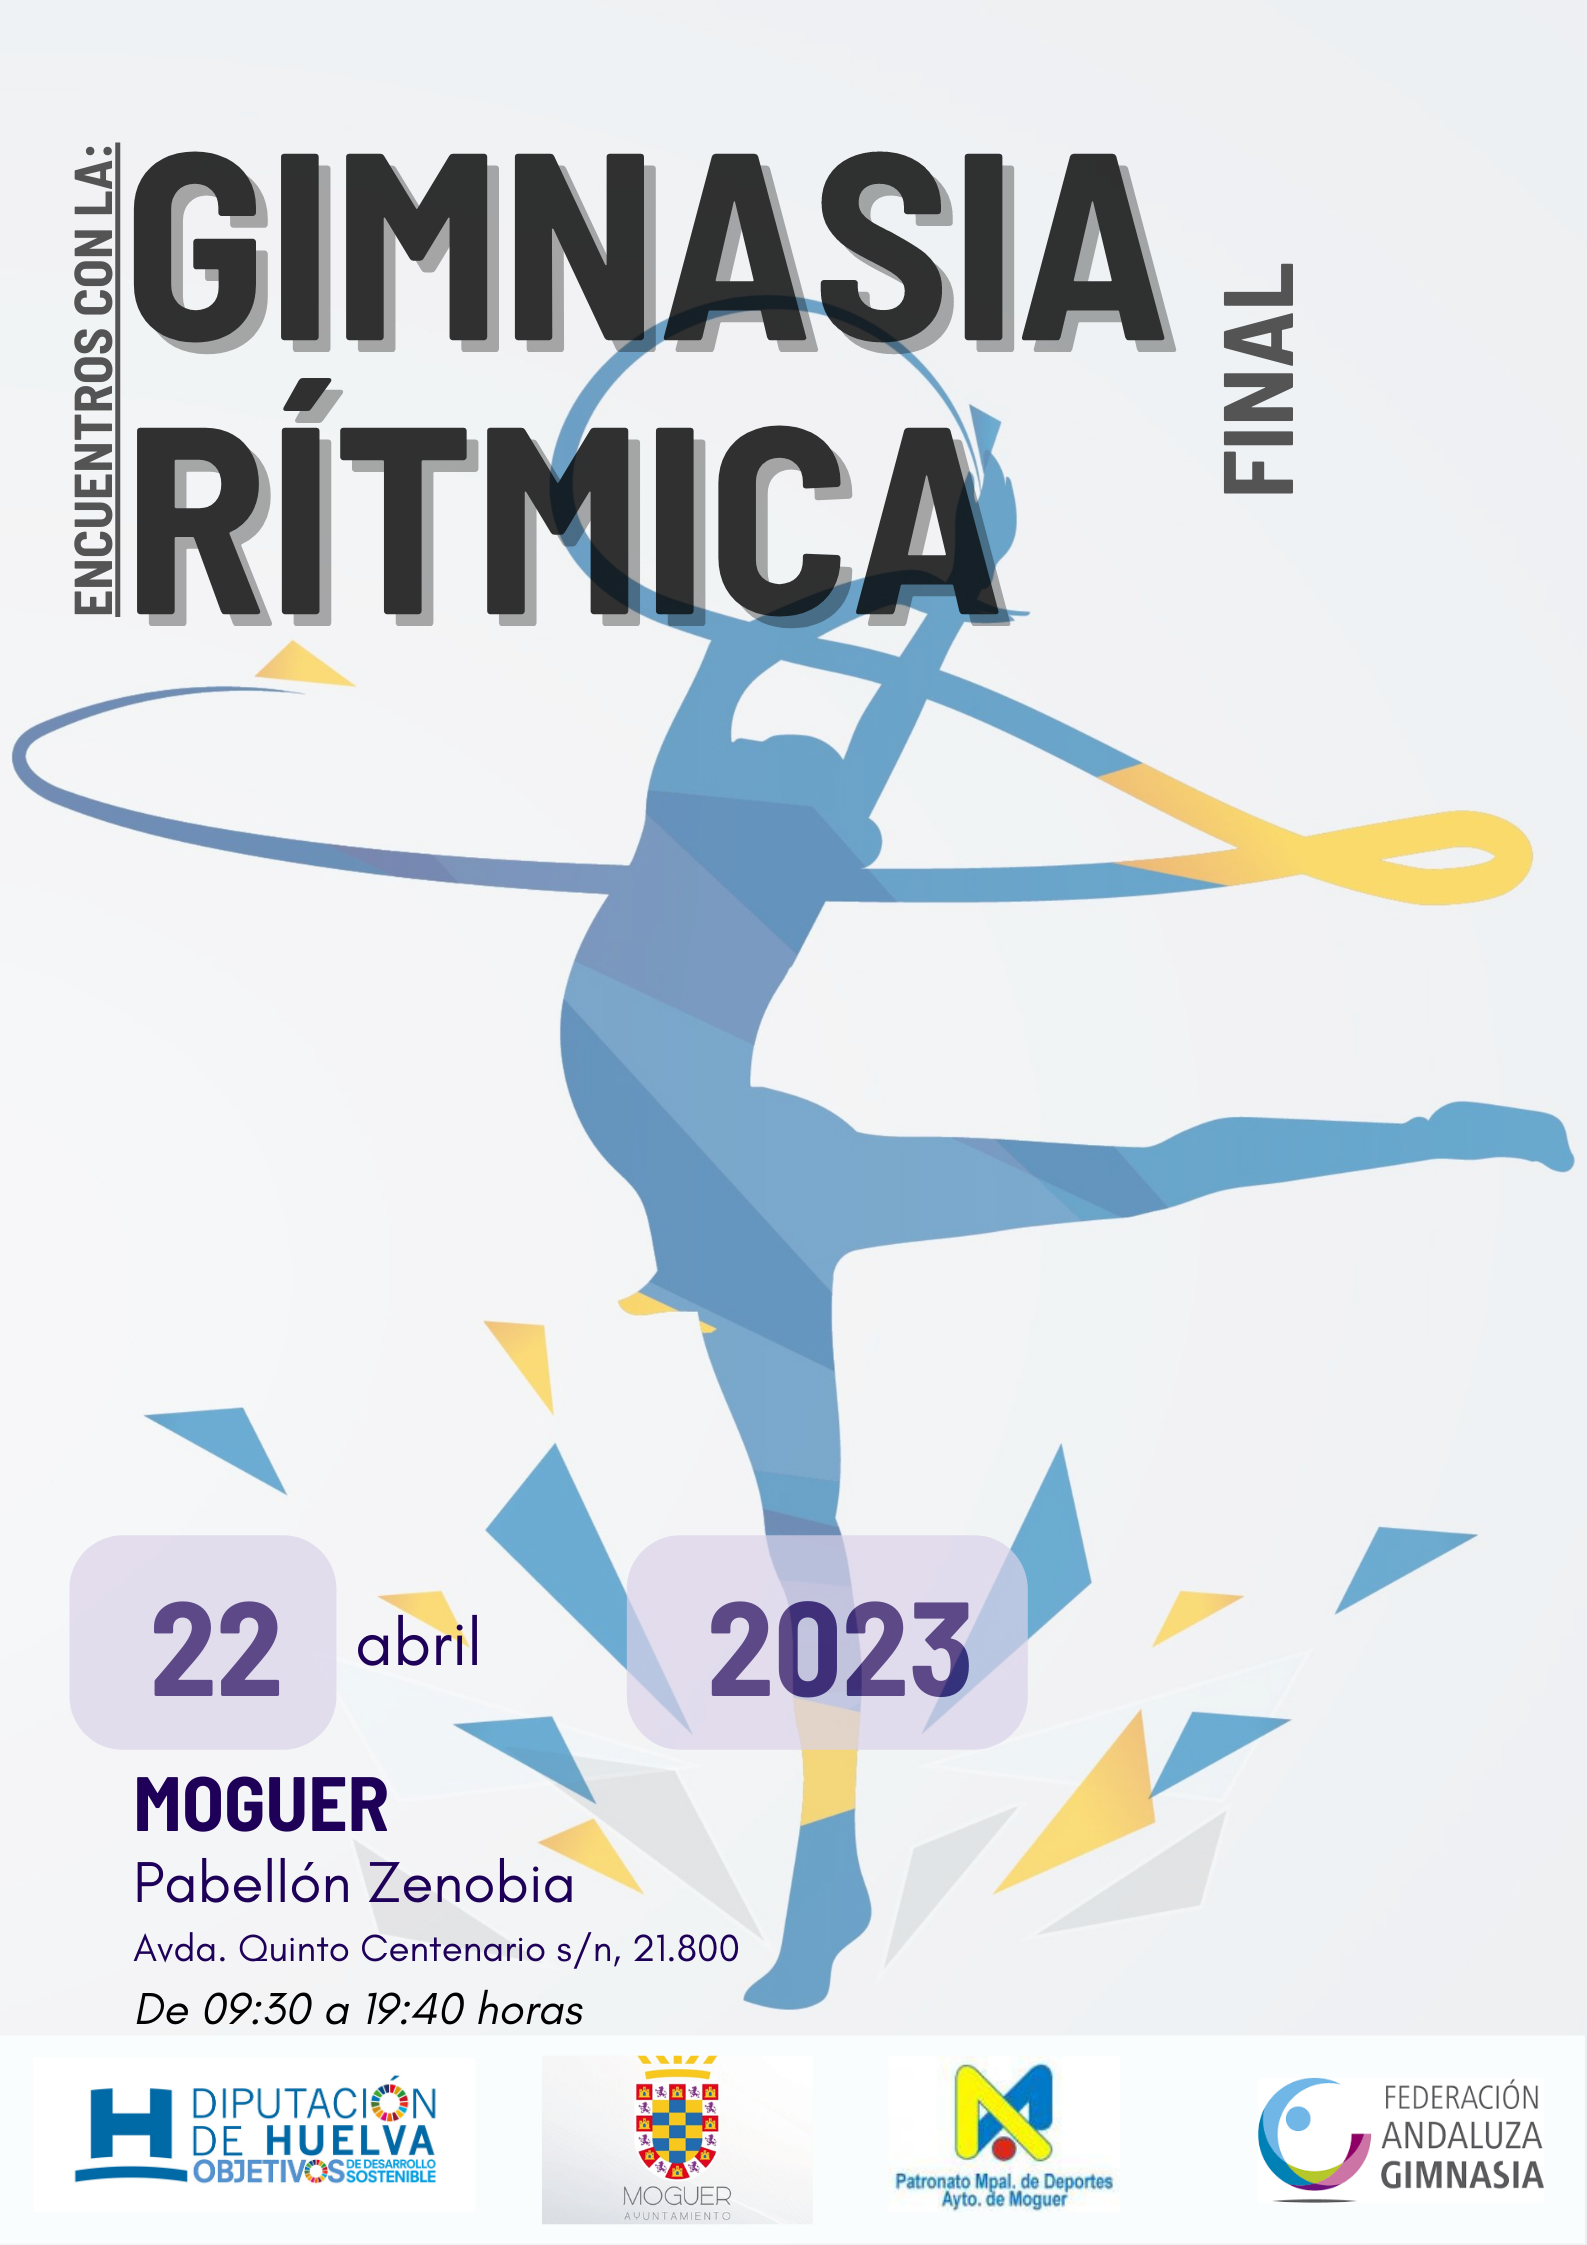 2023 ENCUENTROS GIMNASIA RITMICA - MOGUER